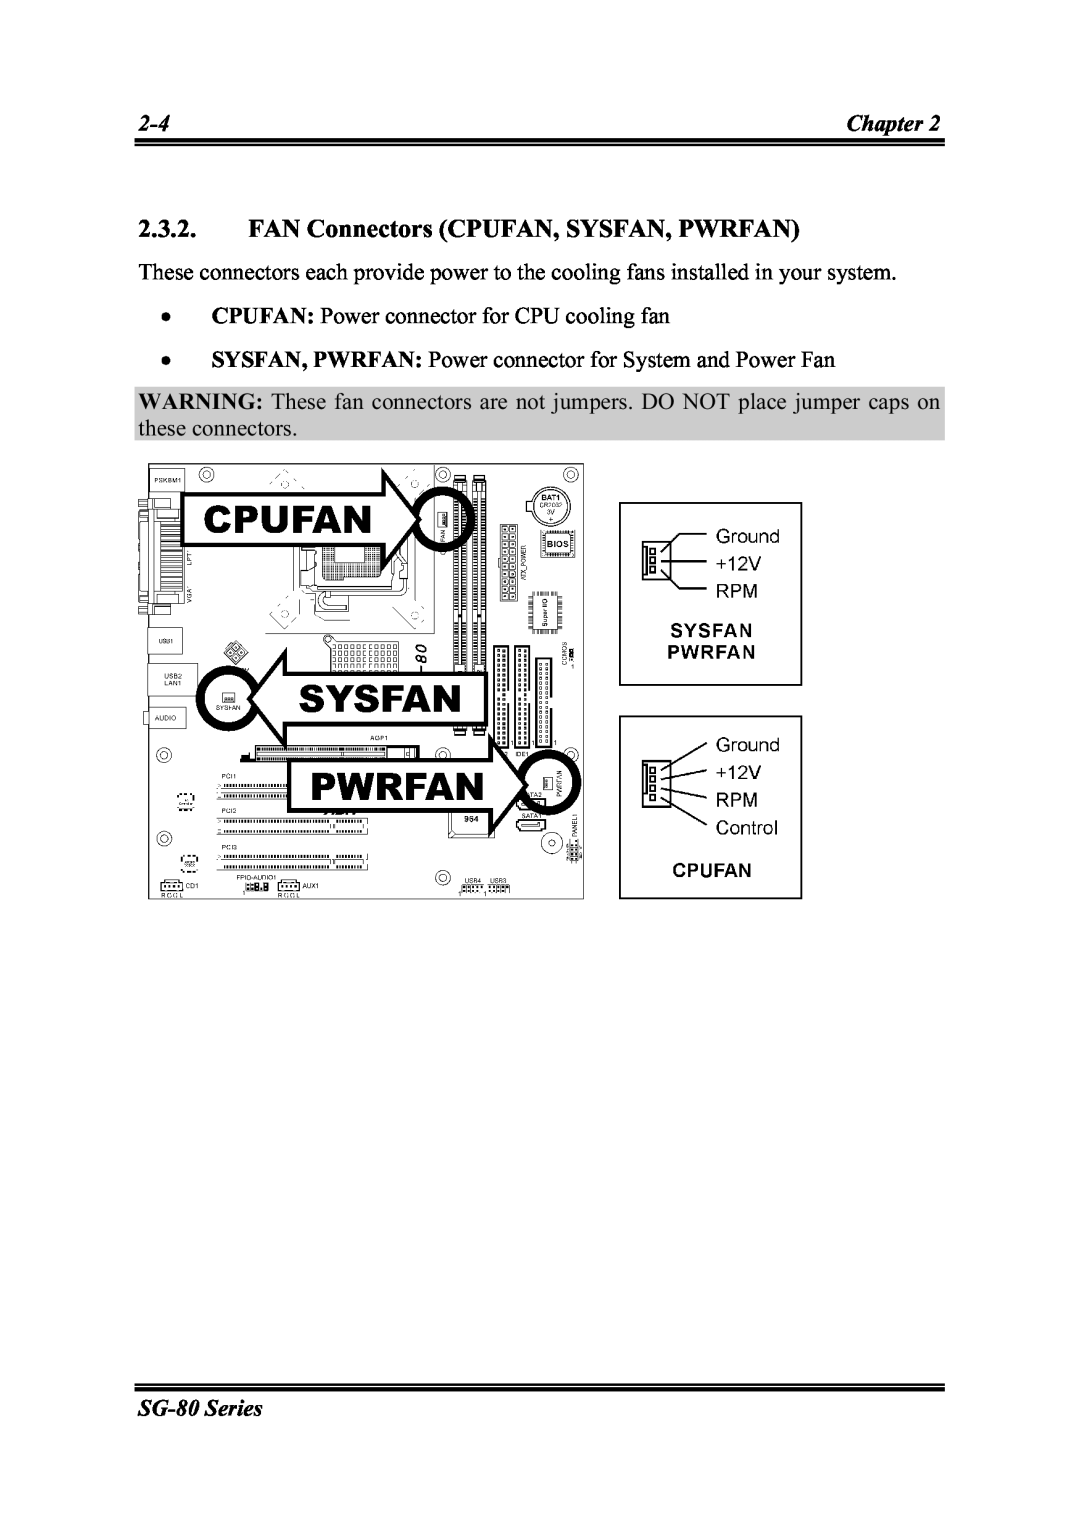 Intel SG-81 user manual FAN Connectors CPUFAN, SYSFAN, PWRFAN, •CPUFAN: Power connector for CPU cooling fan, SG-80Series 